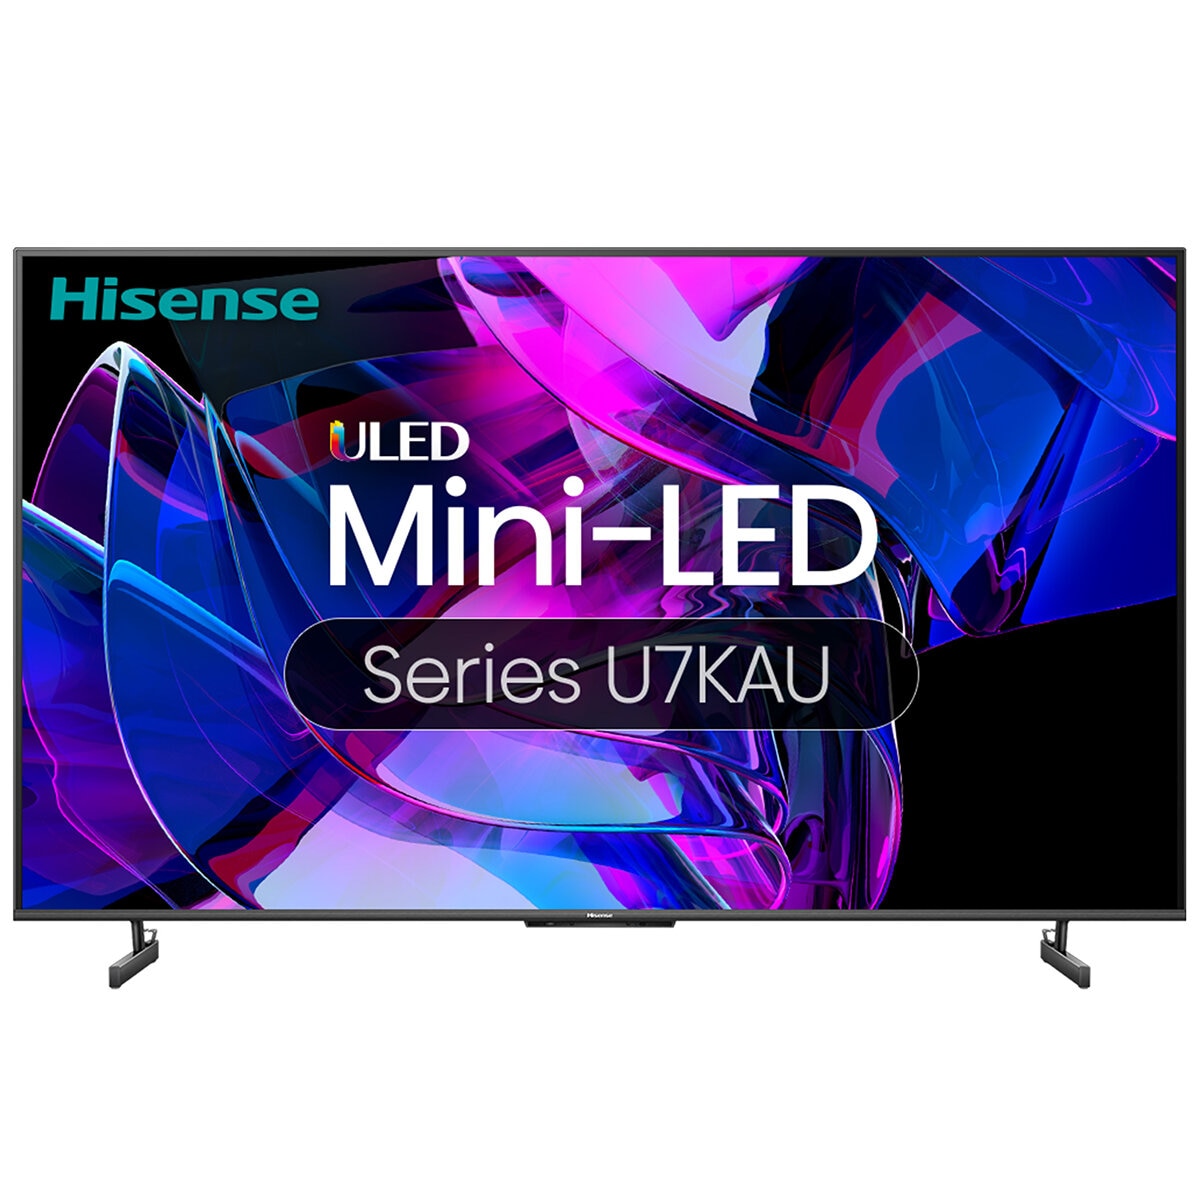 Hisense 65 Inch 4K Mini-LED ULED Smart TV 65U7KAU